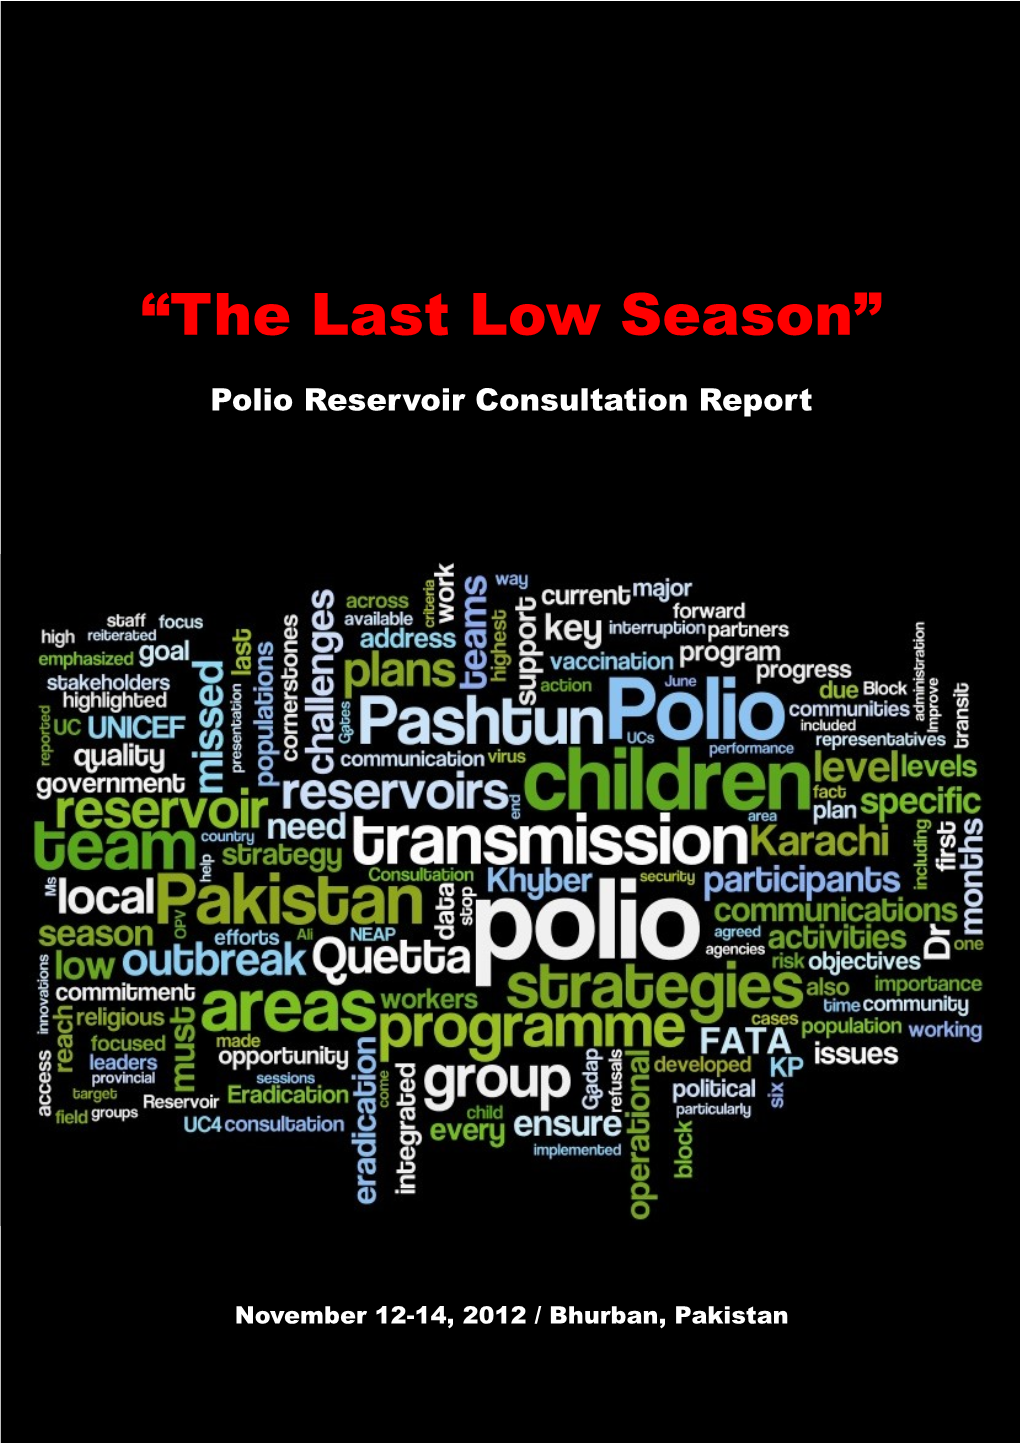 Pakistan Reservoir Consultation Report Nov 2012